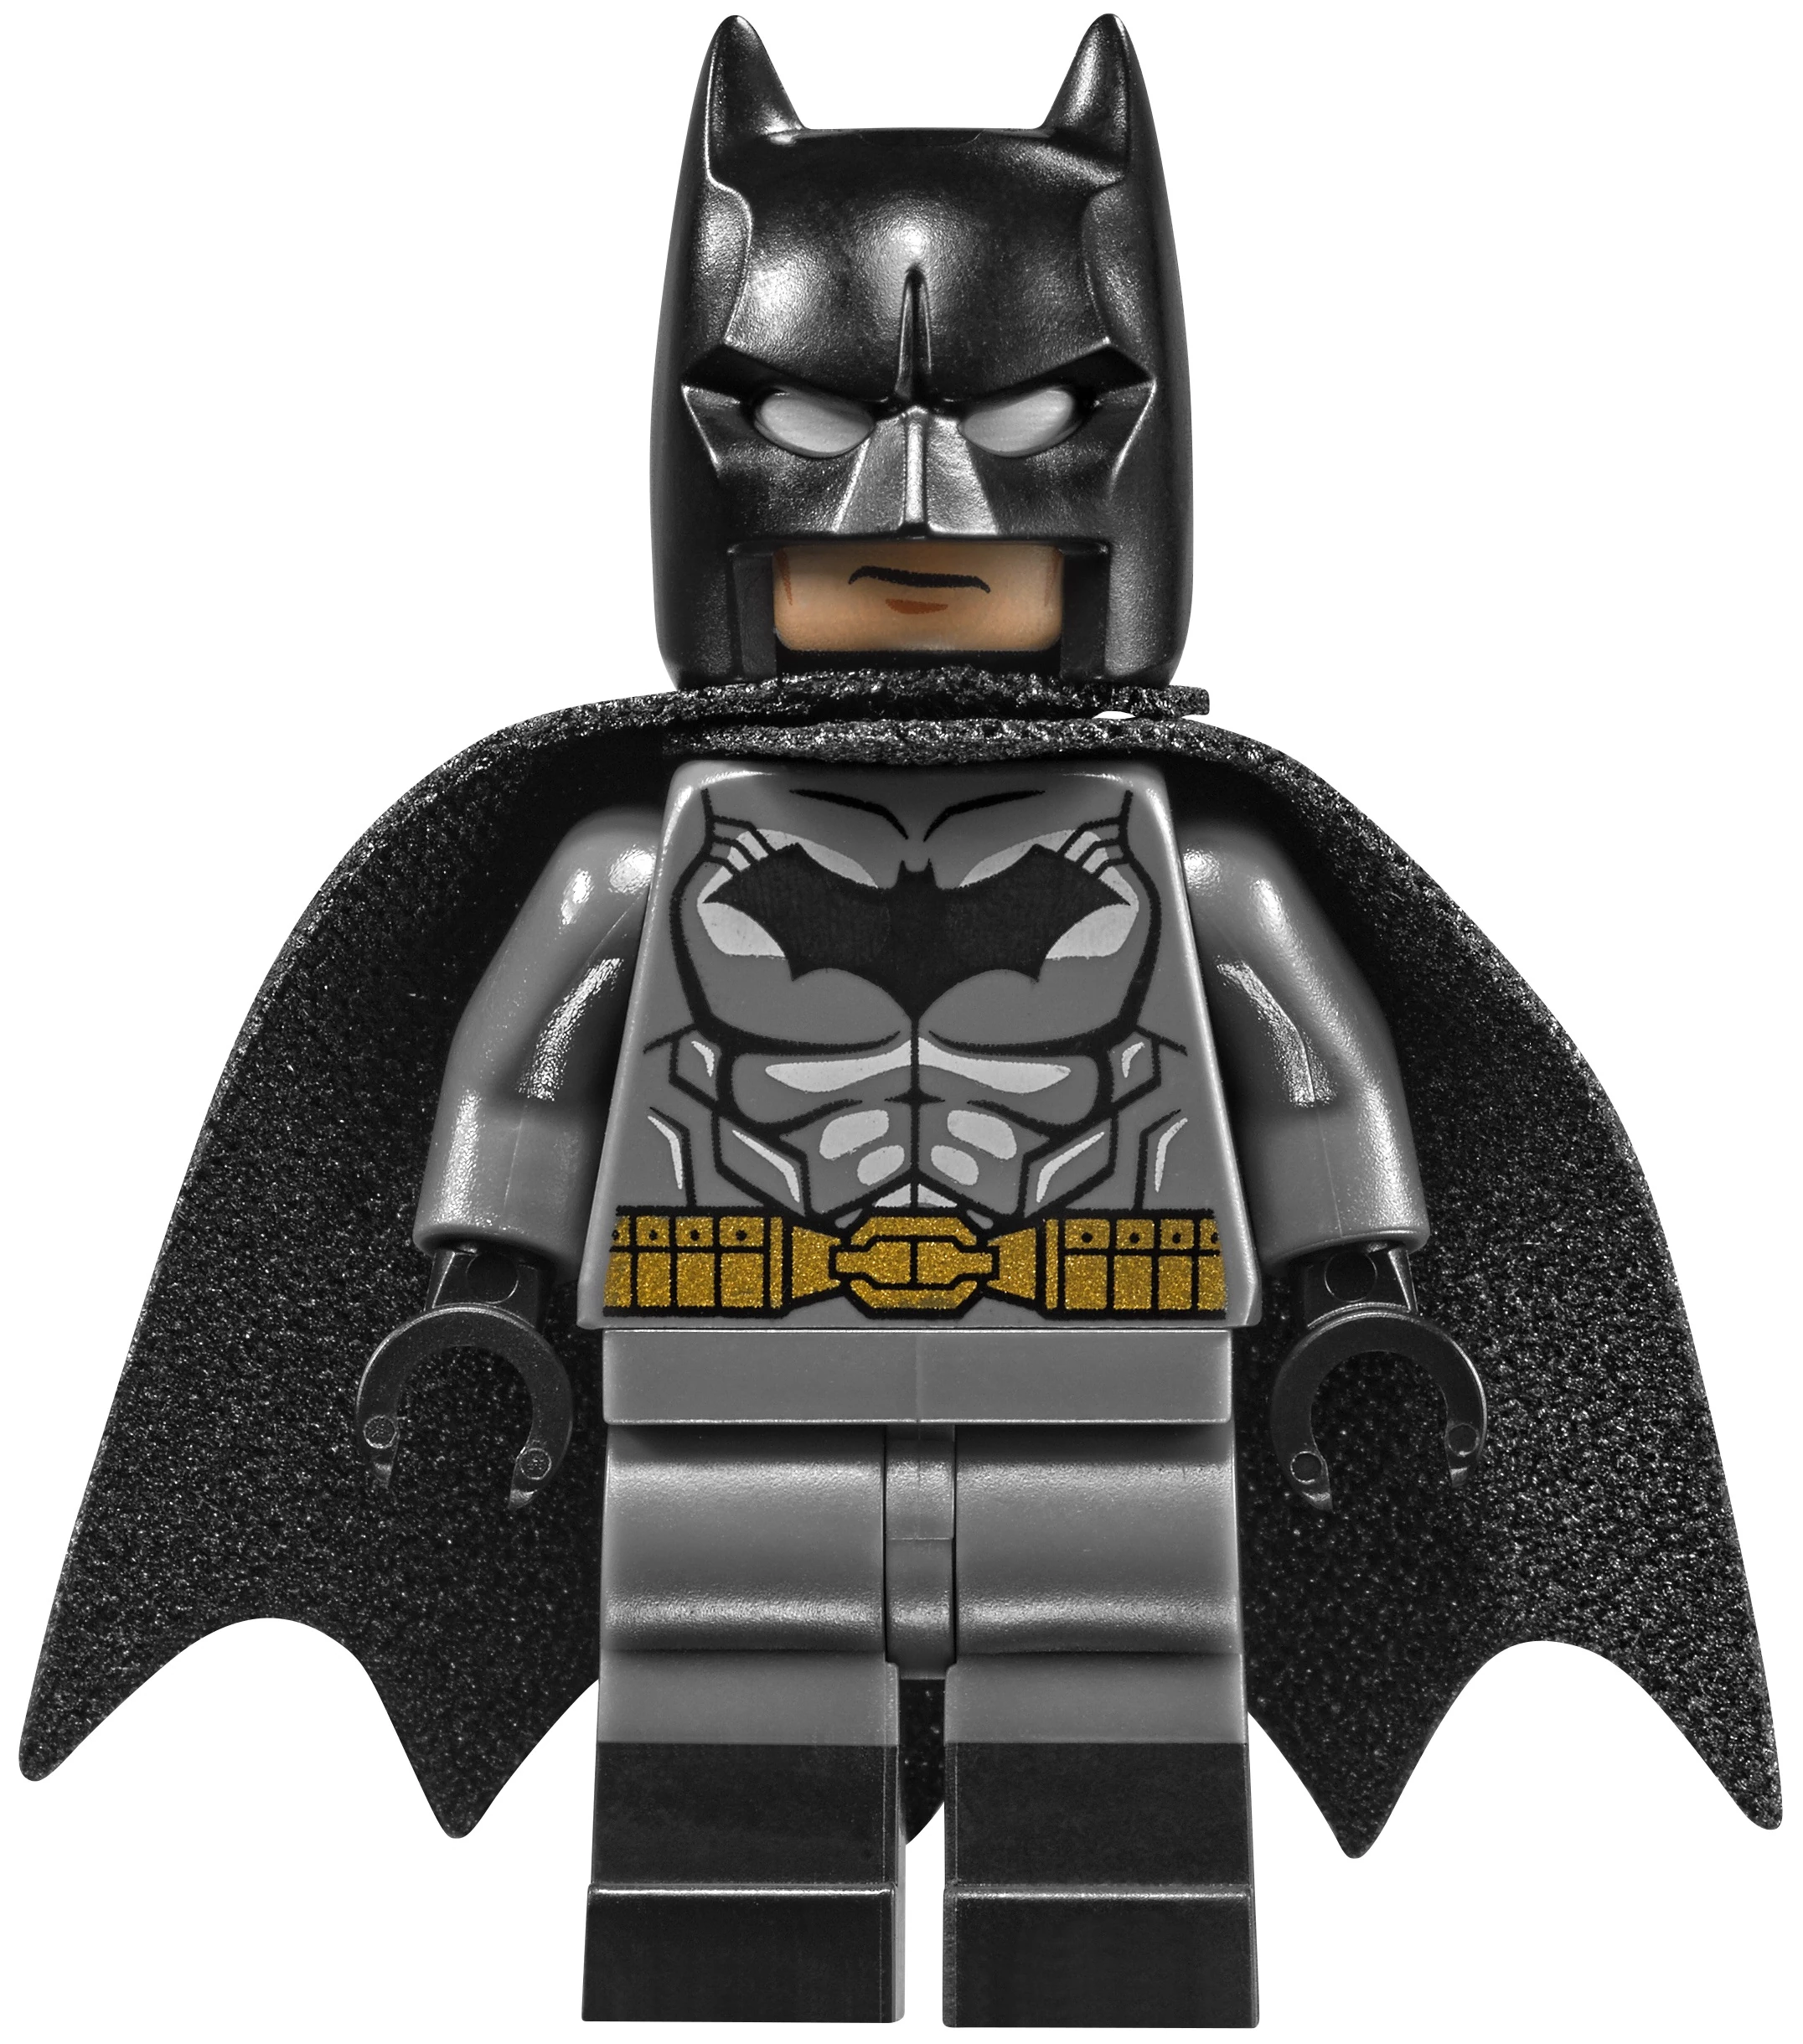 large lego batman figure